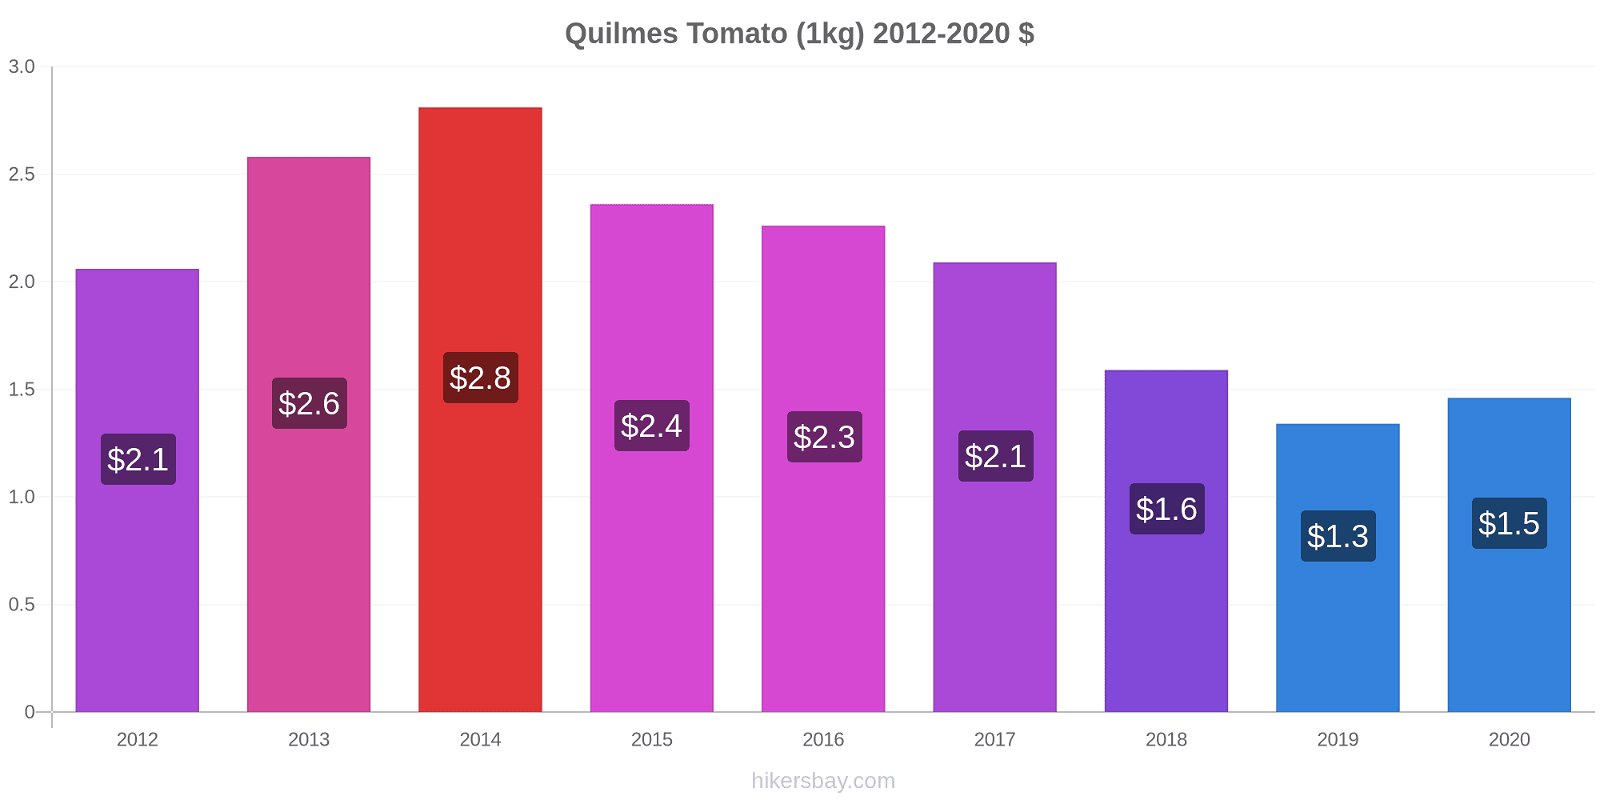 Quilmes price changes Tomato (1kg) hikersbay.com